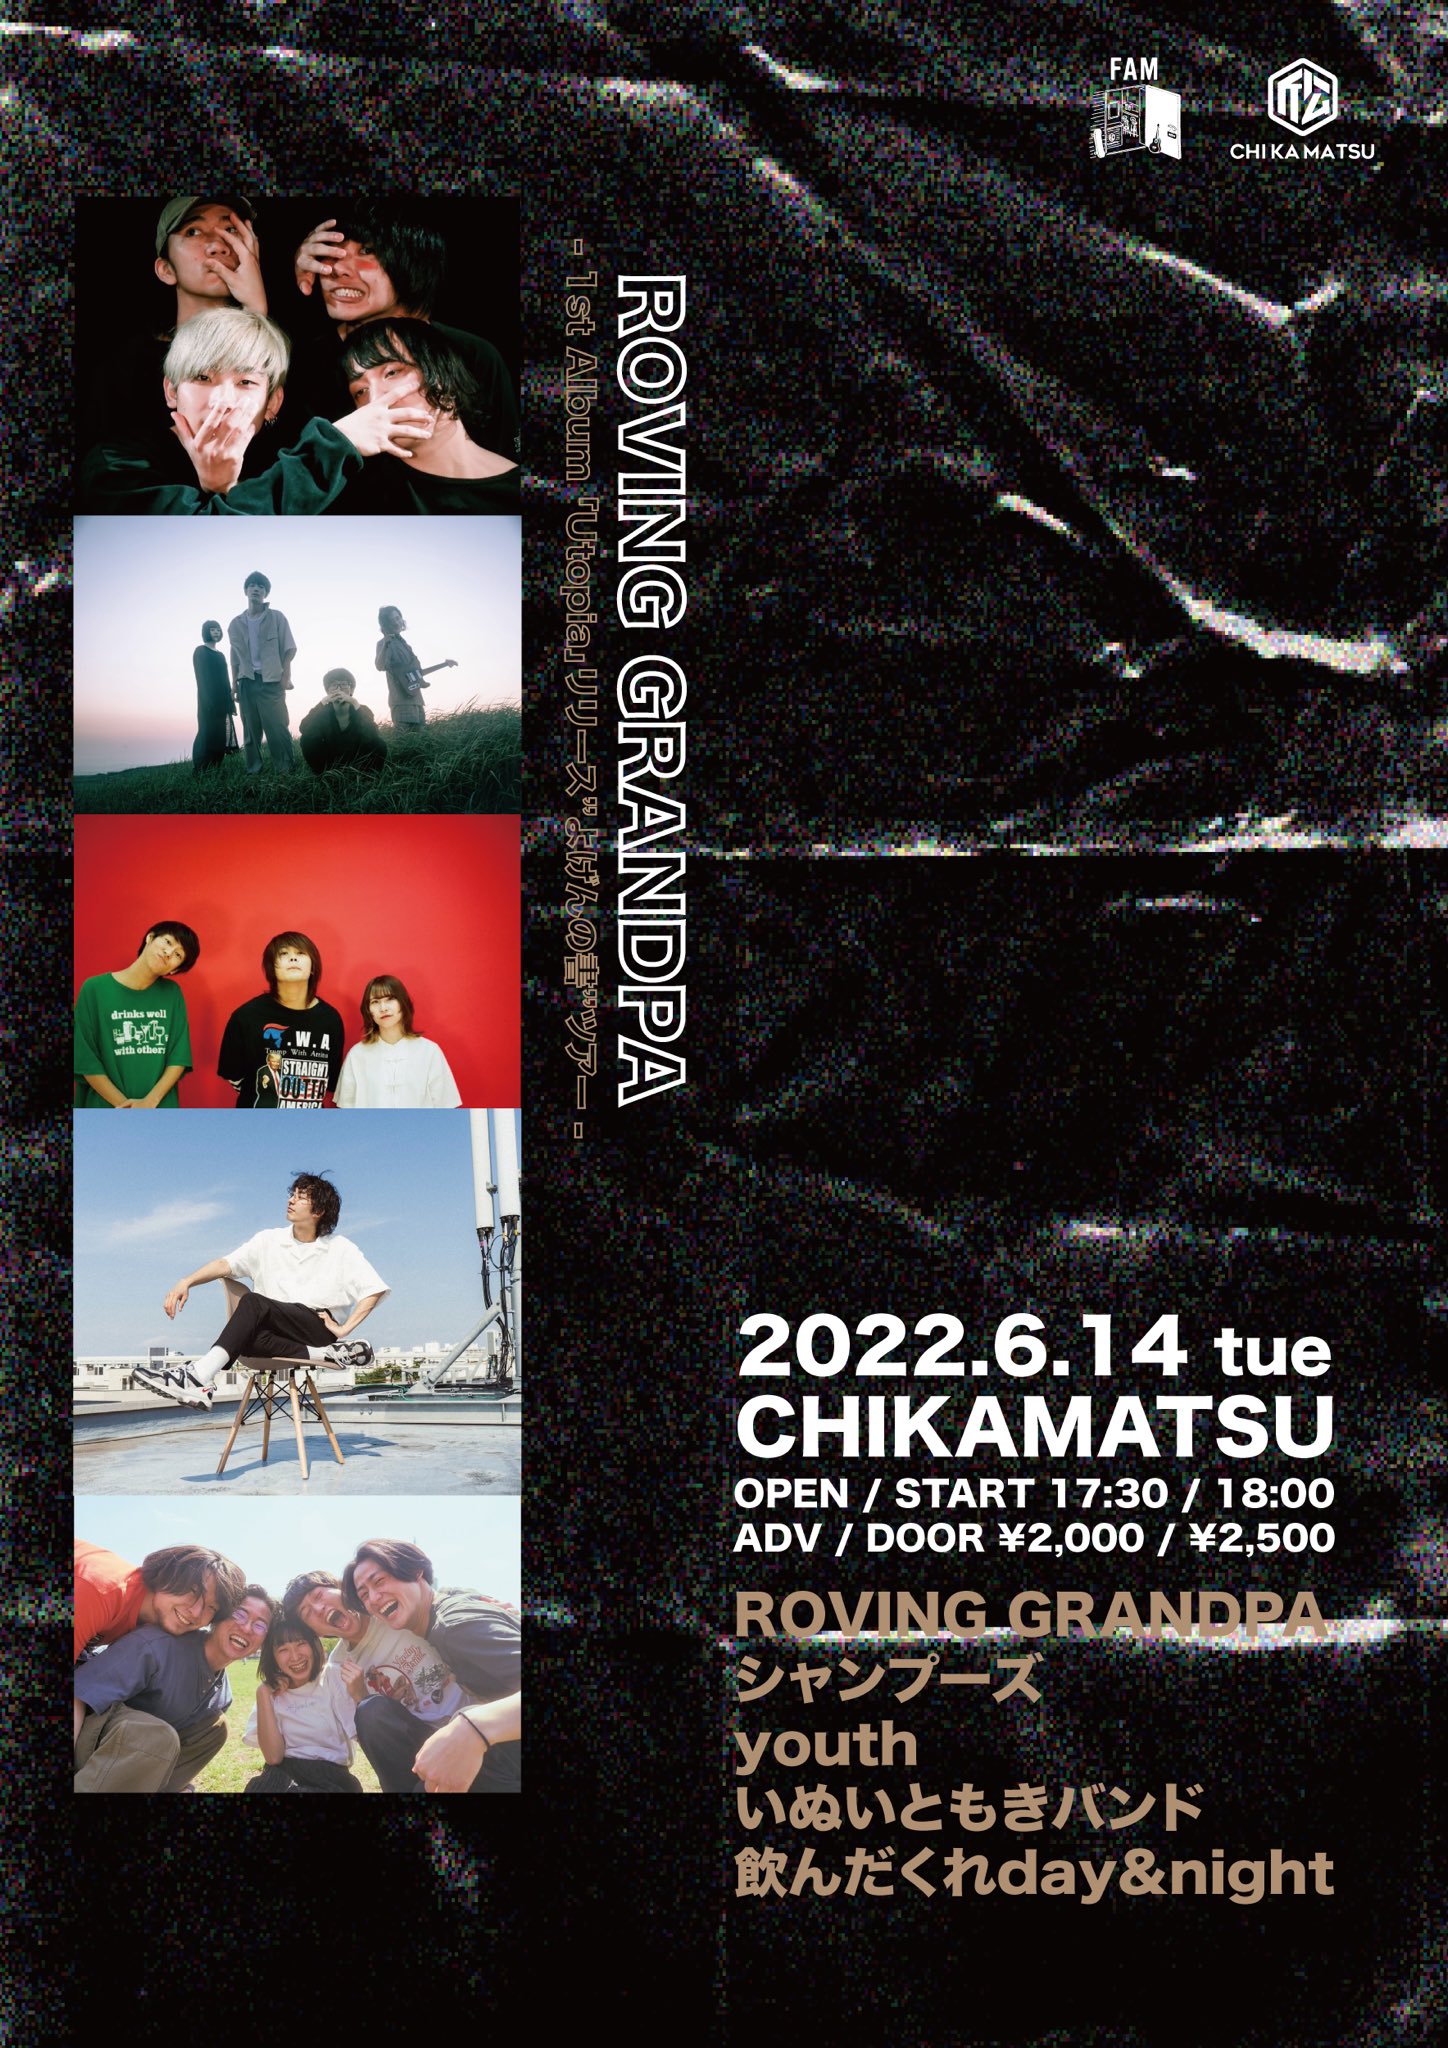 ROVING GRANDPA 1st ALBUM「Utopia」RELEASE “よげんの書“ツアー